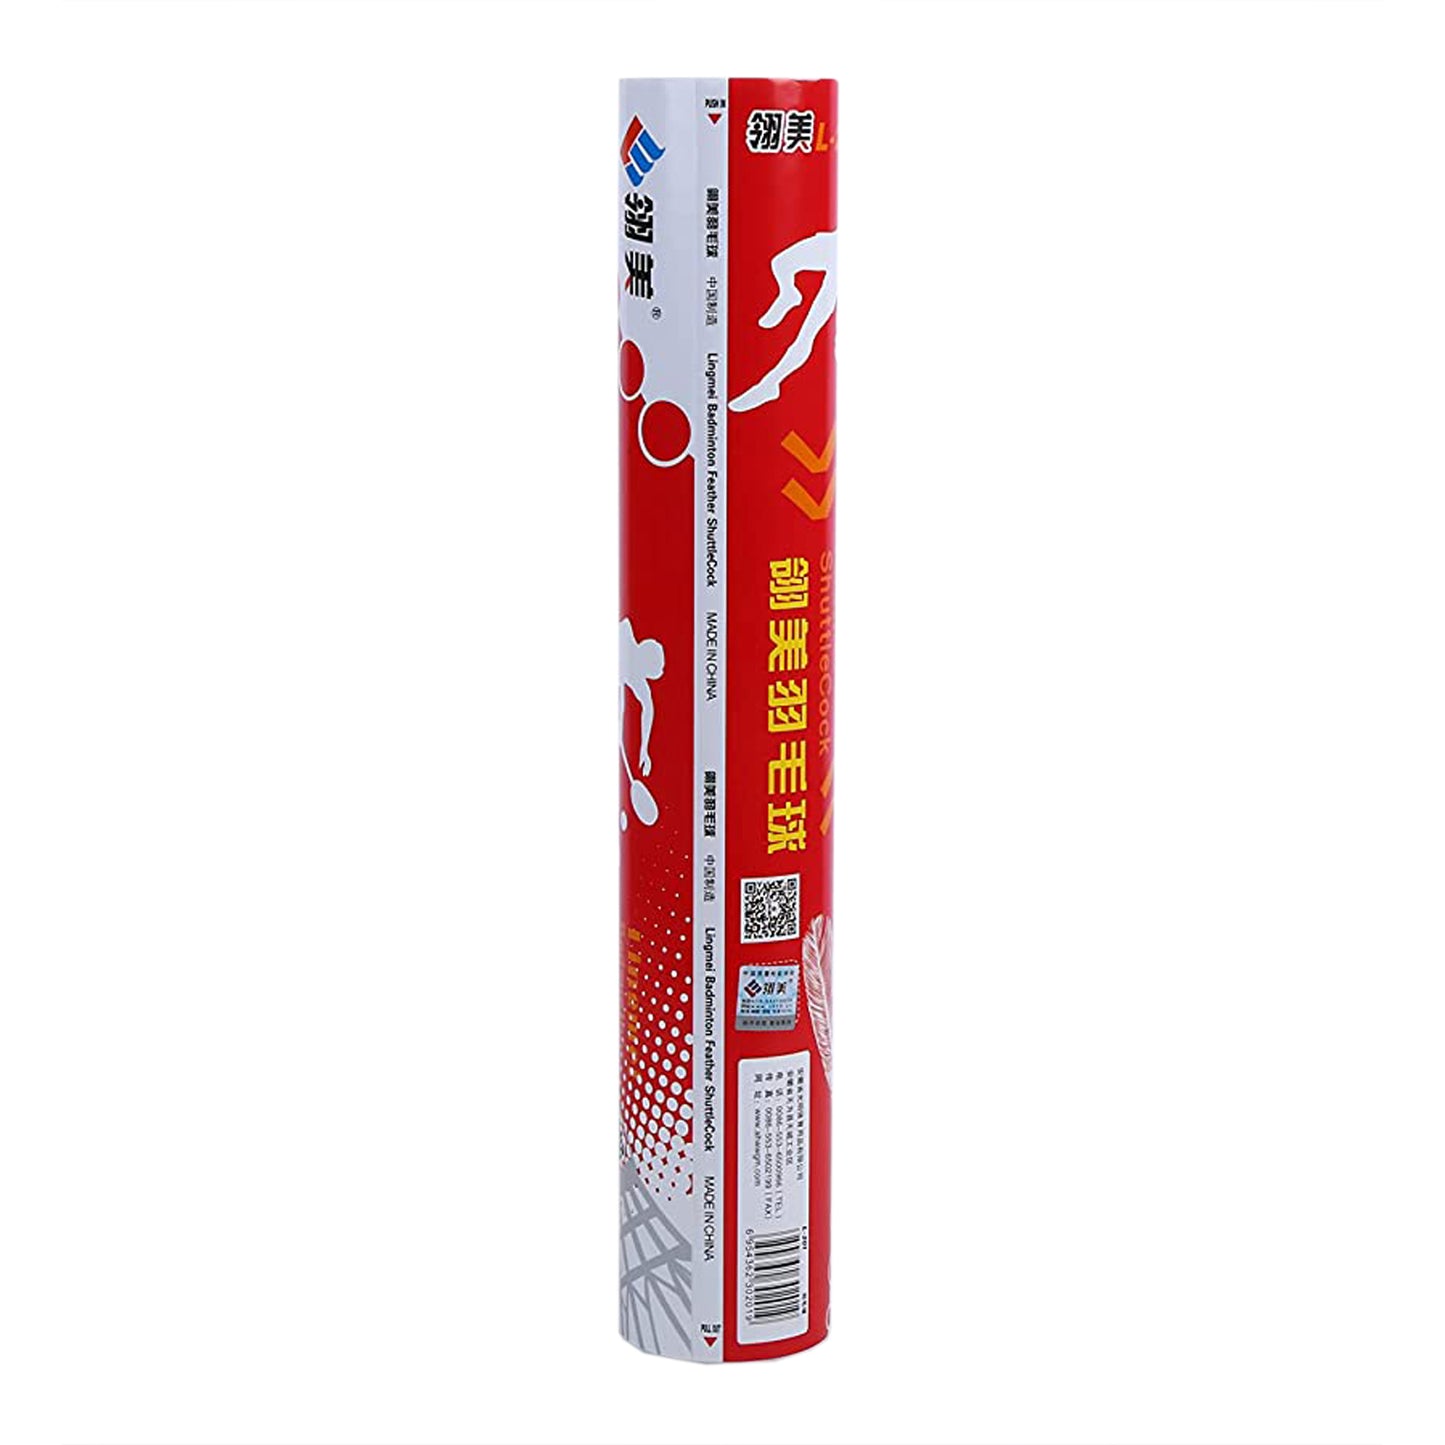 Ling-Mei L-201 Badminton Feather Shuttlecock - Best Price online Prokicksports.com